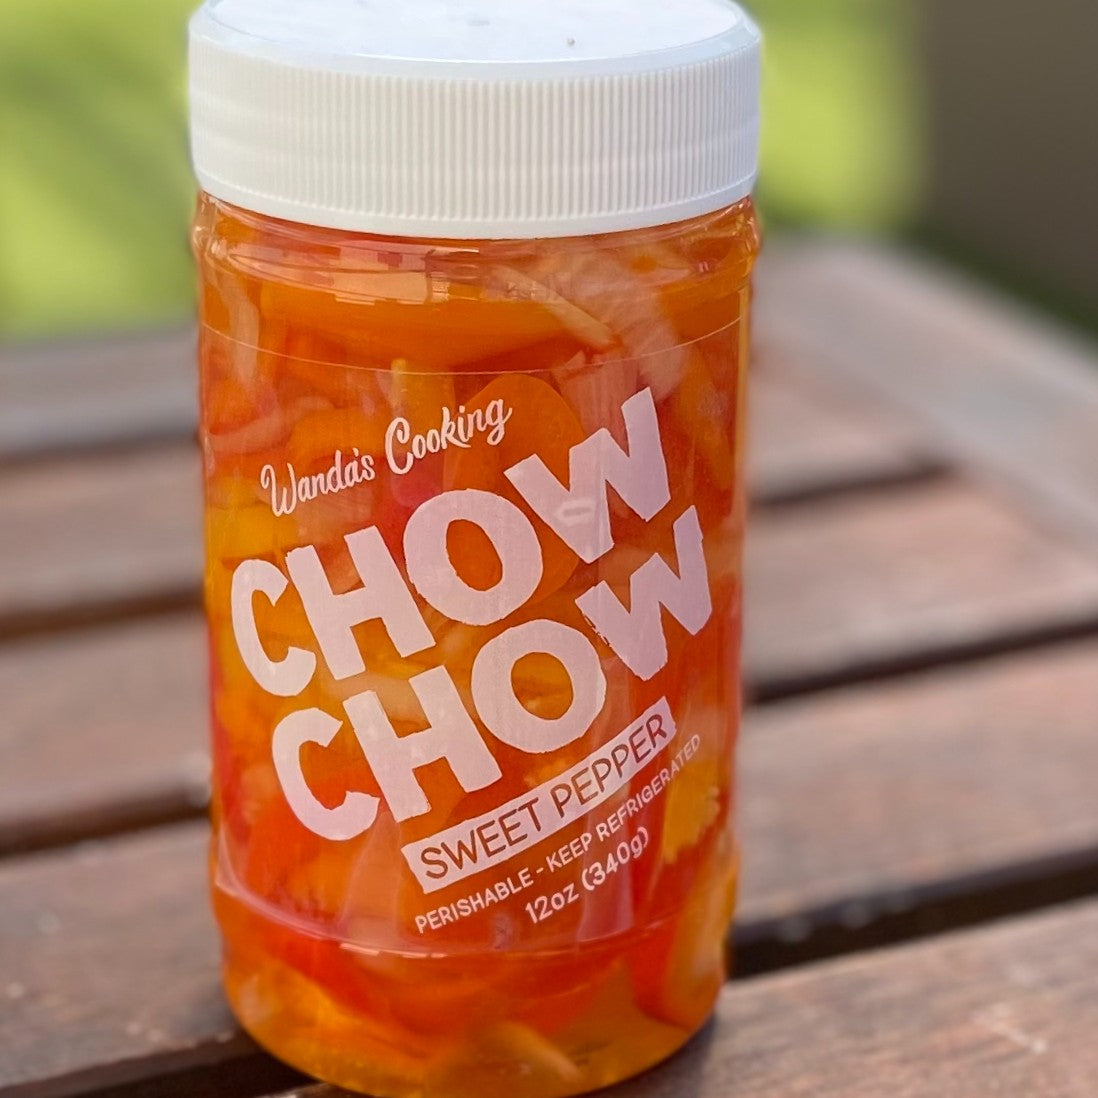 Sweet Pepper Chowchow